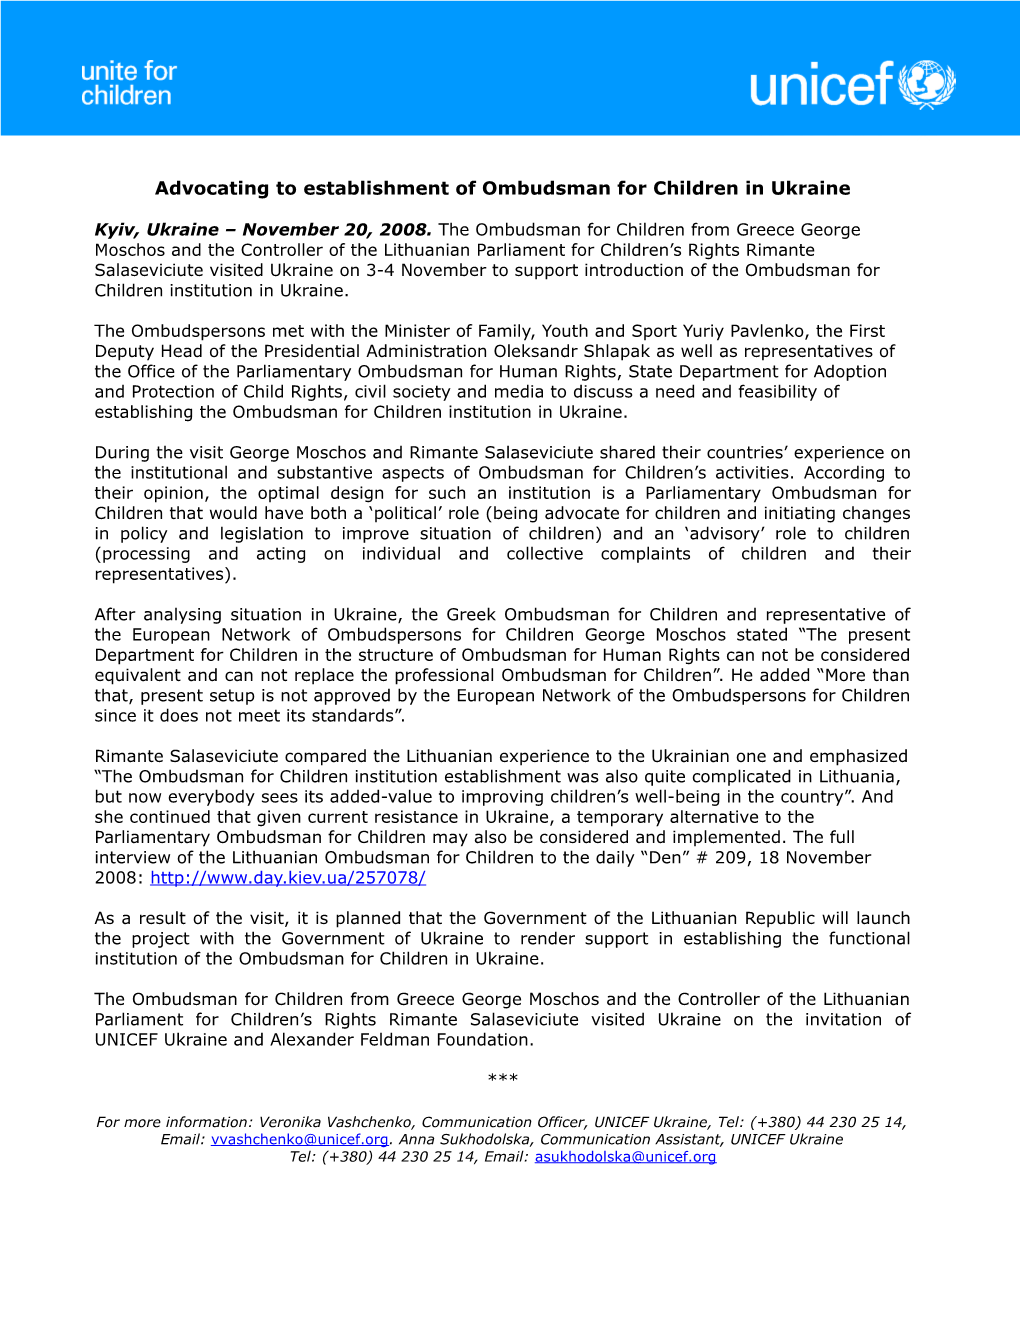 Advocatingto Establishment of Ombudsman for Children in Ukraine